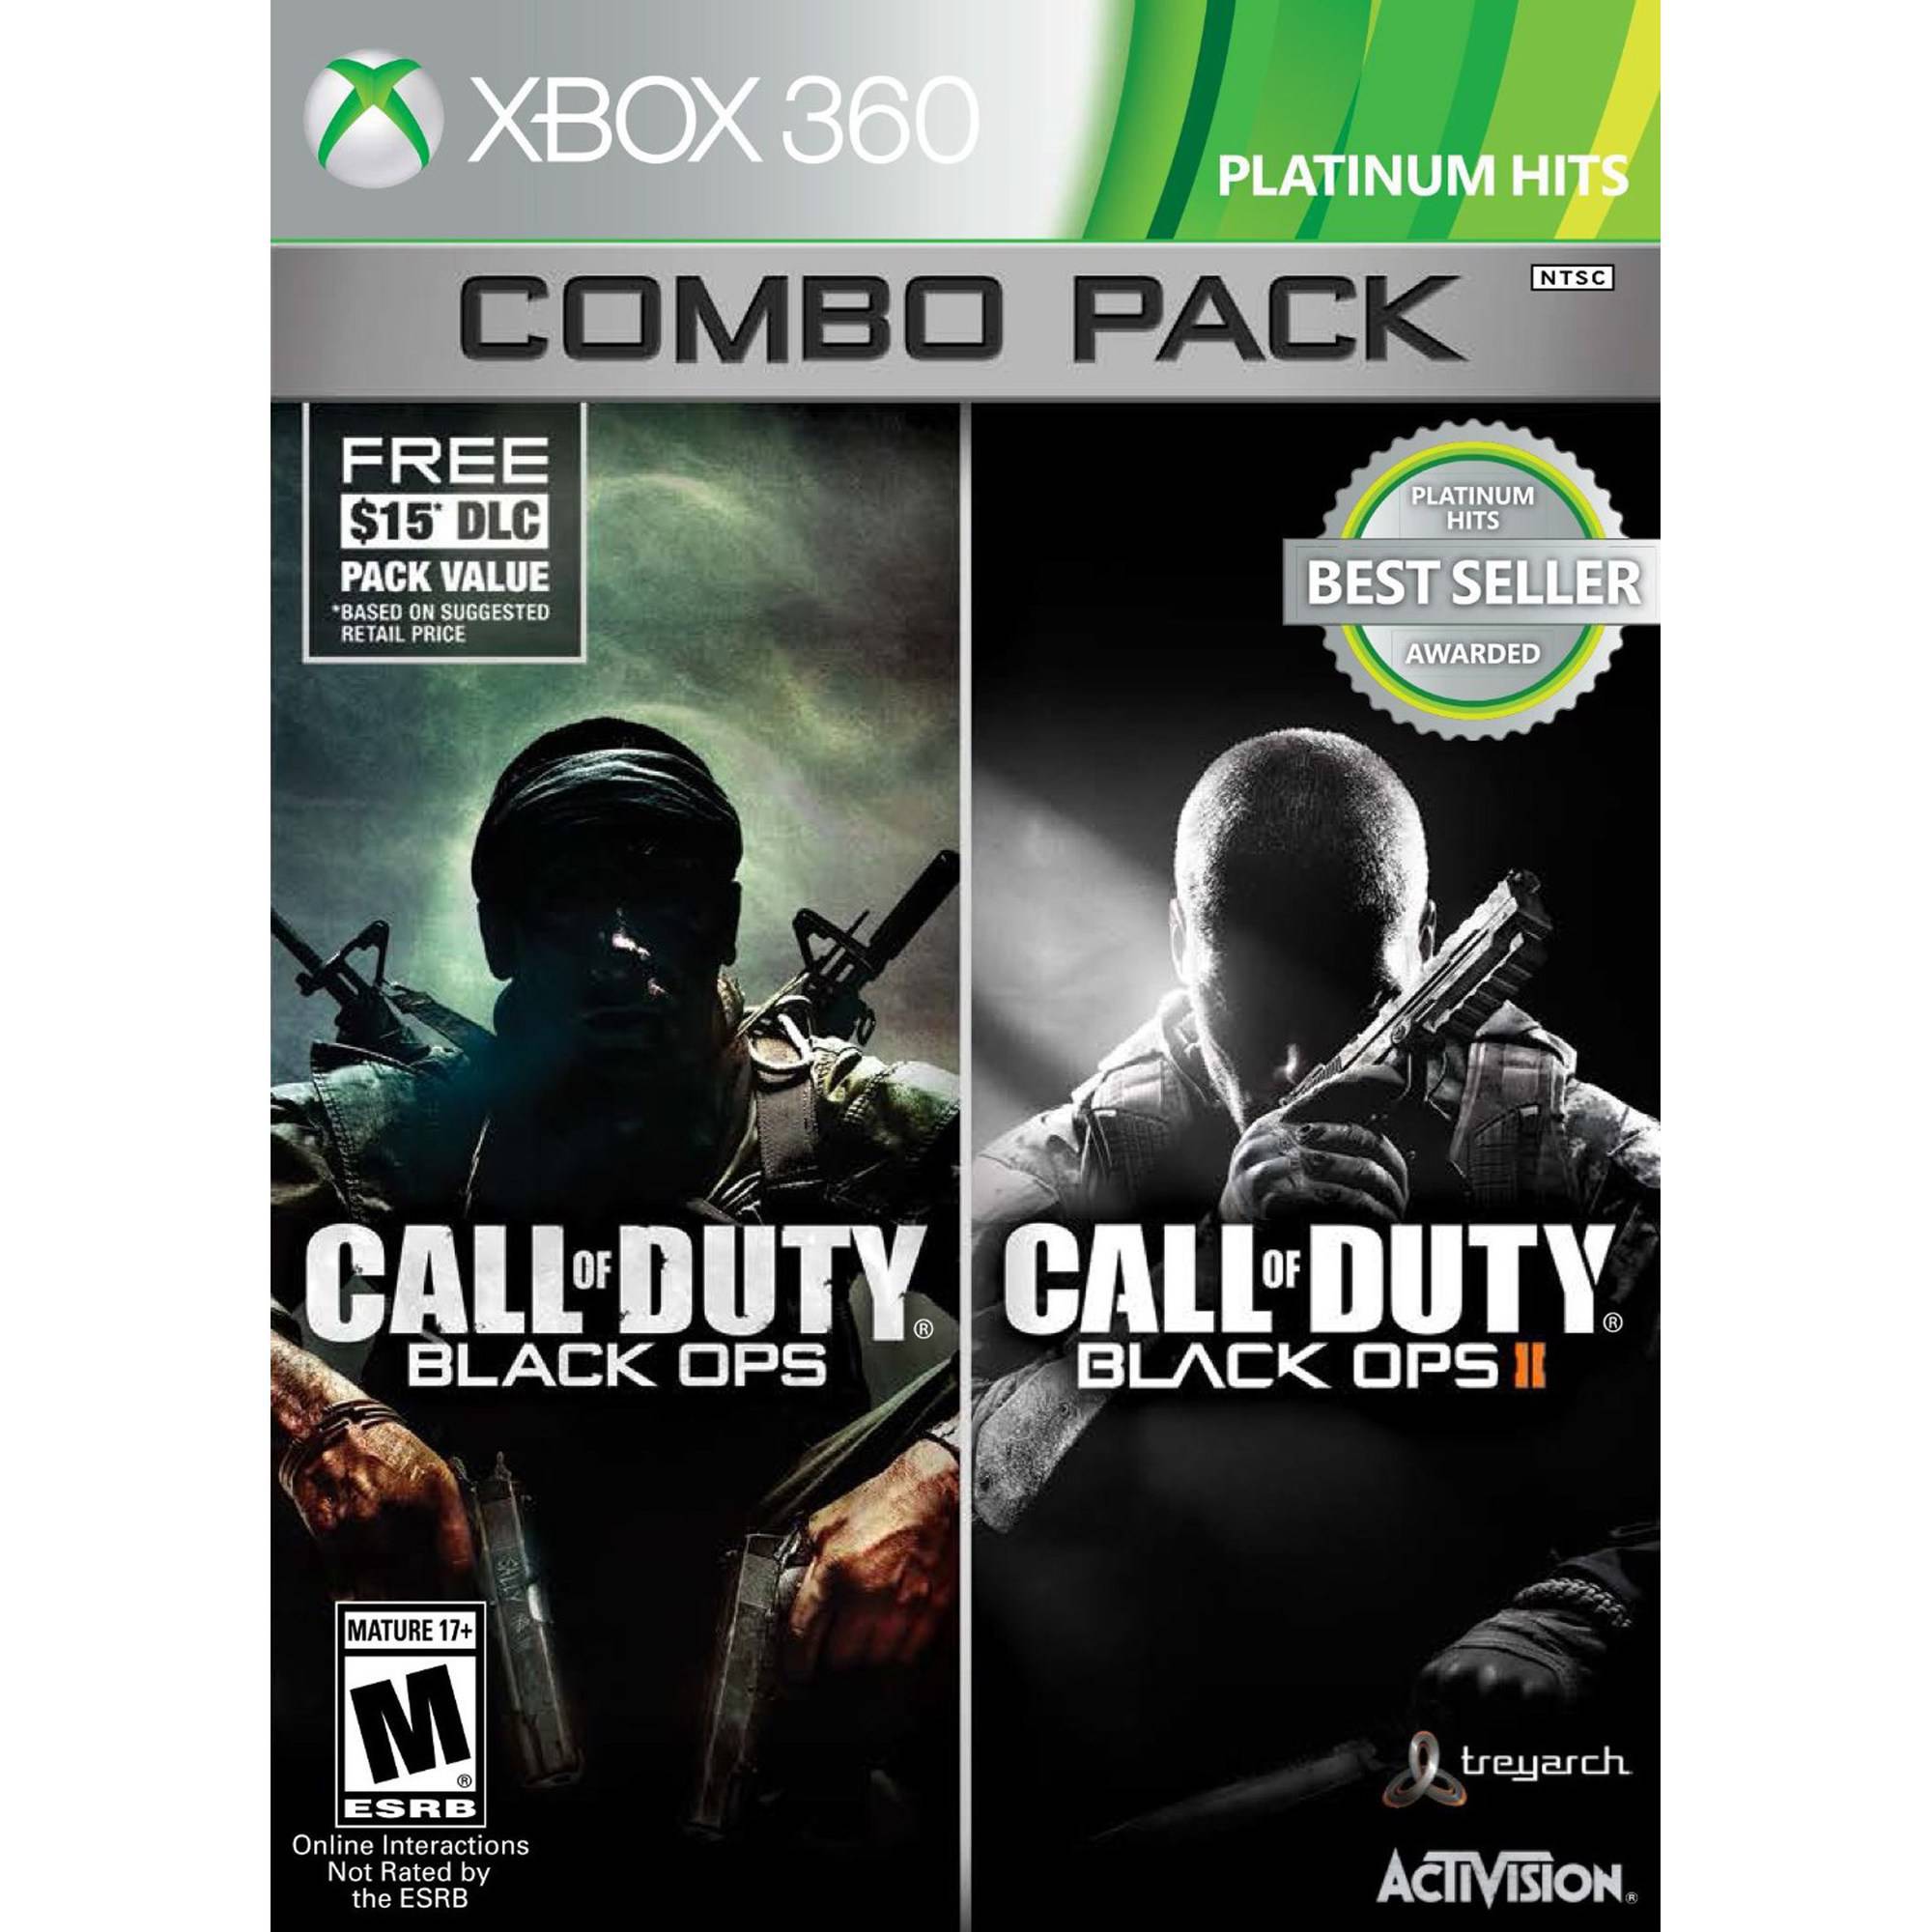 Original xbox games compatible 360